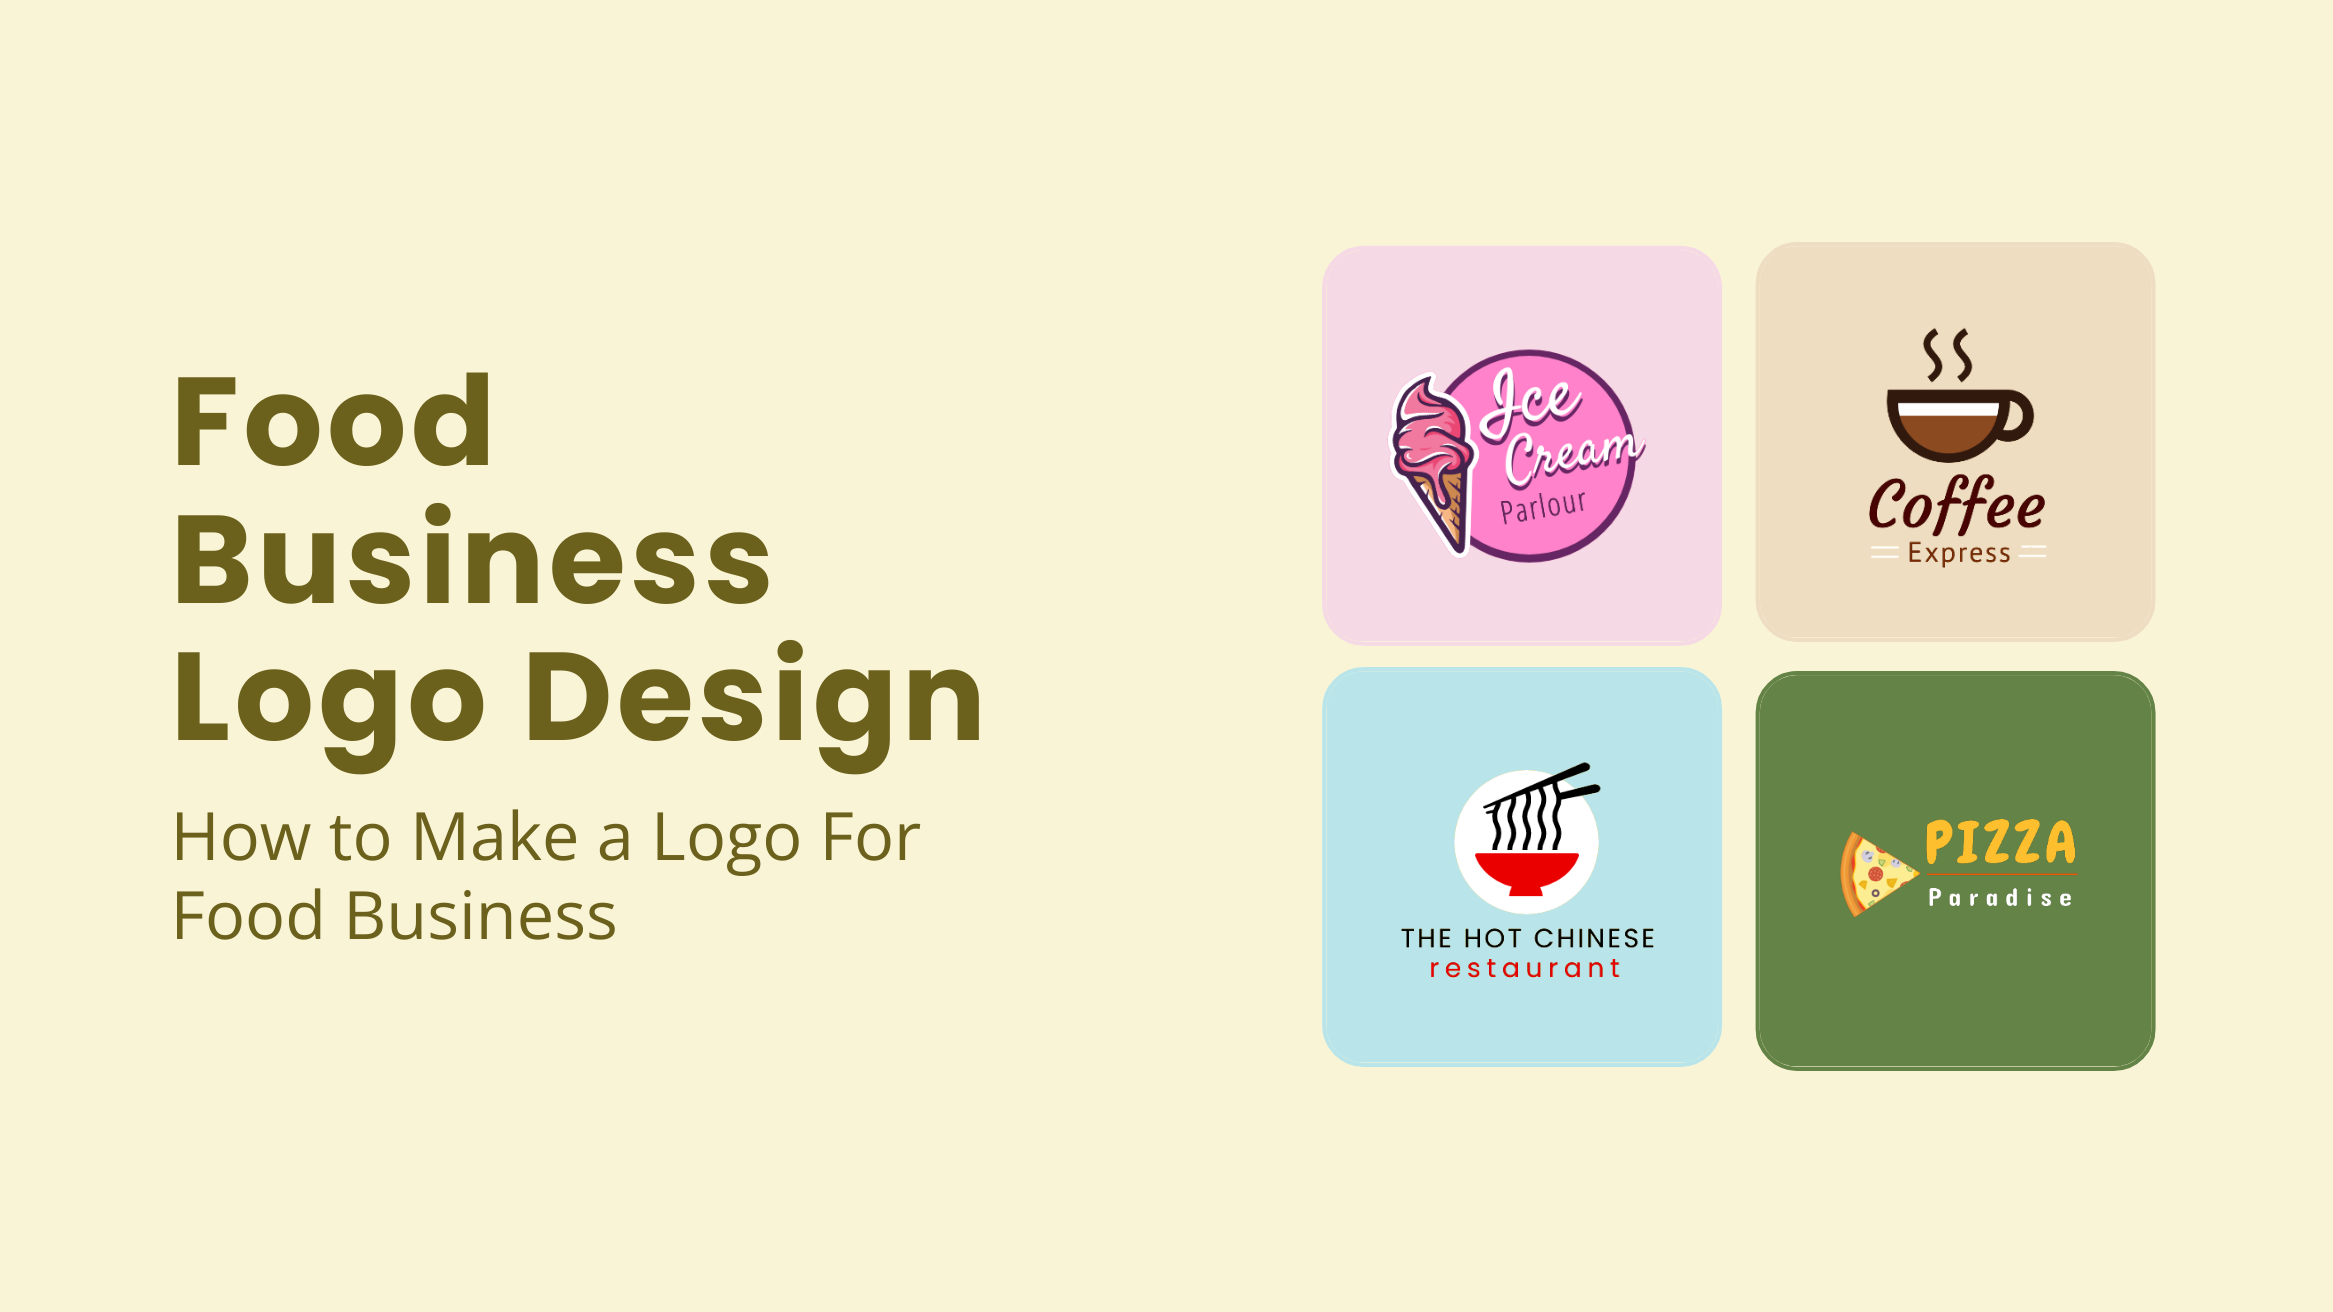 Food Business Logo Design How to Make a Logo For Food Business